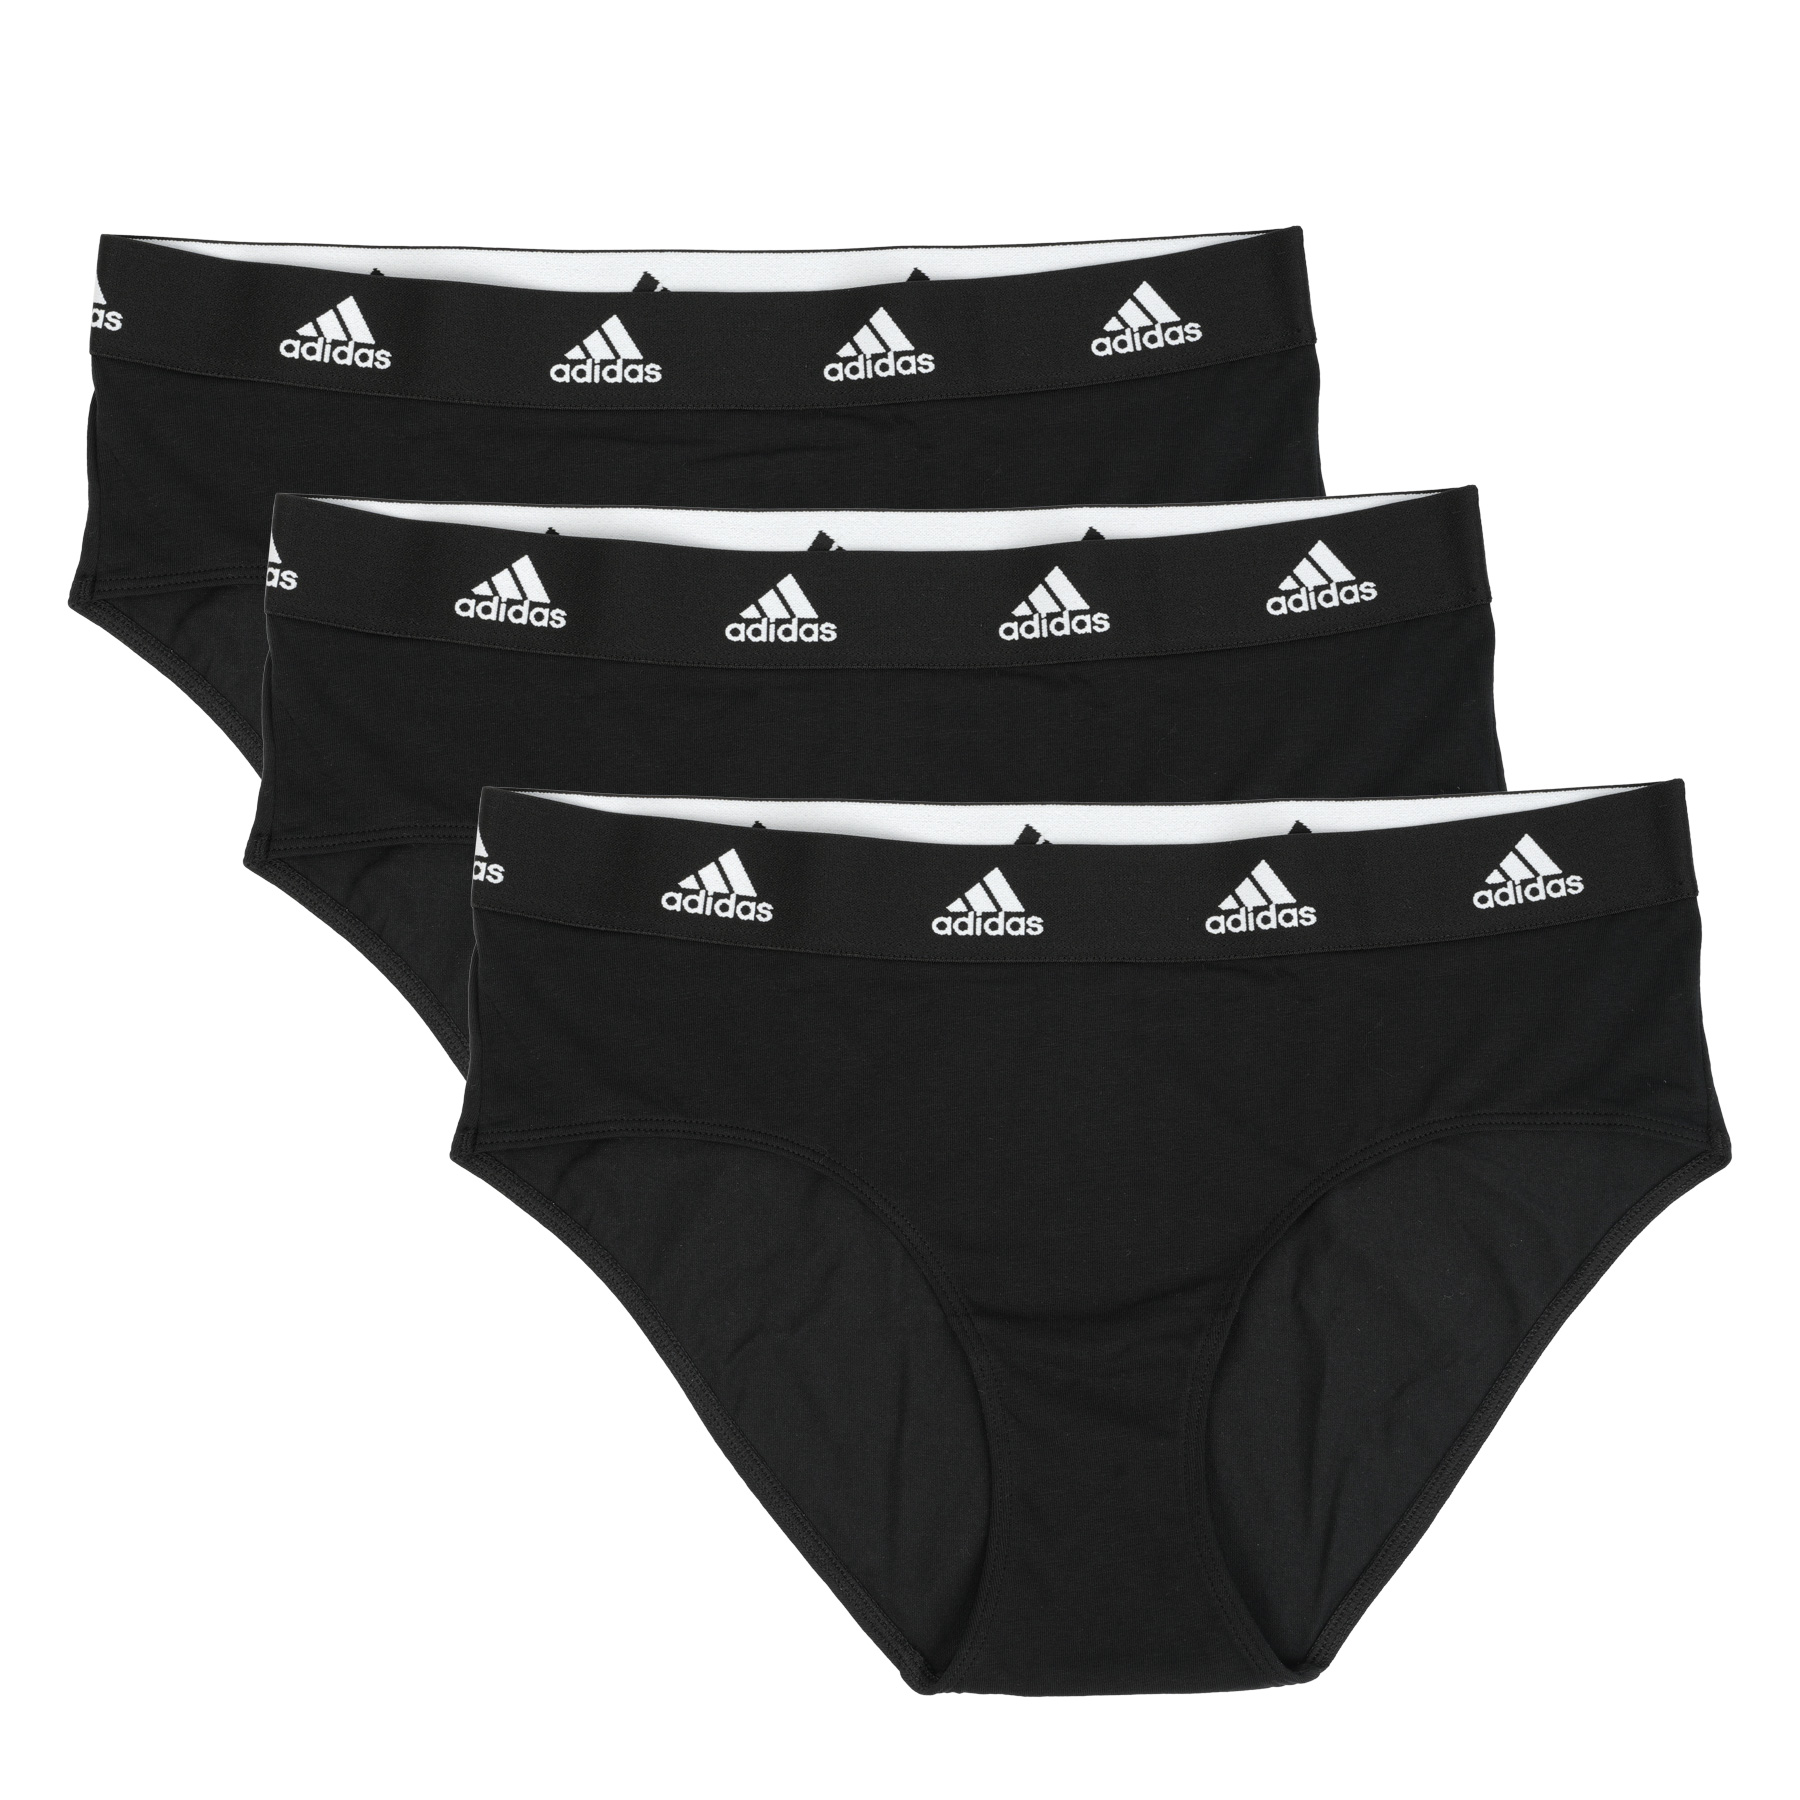 Productfoto van adidas Sports Underwear Hipster Onderbroek Dames - 3 Pack - 000-zwart